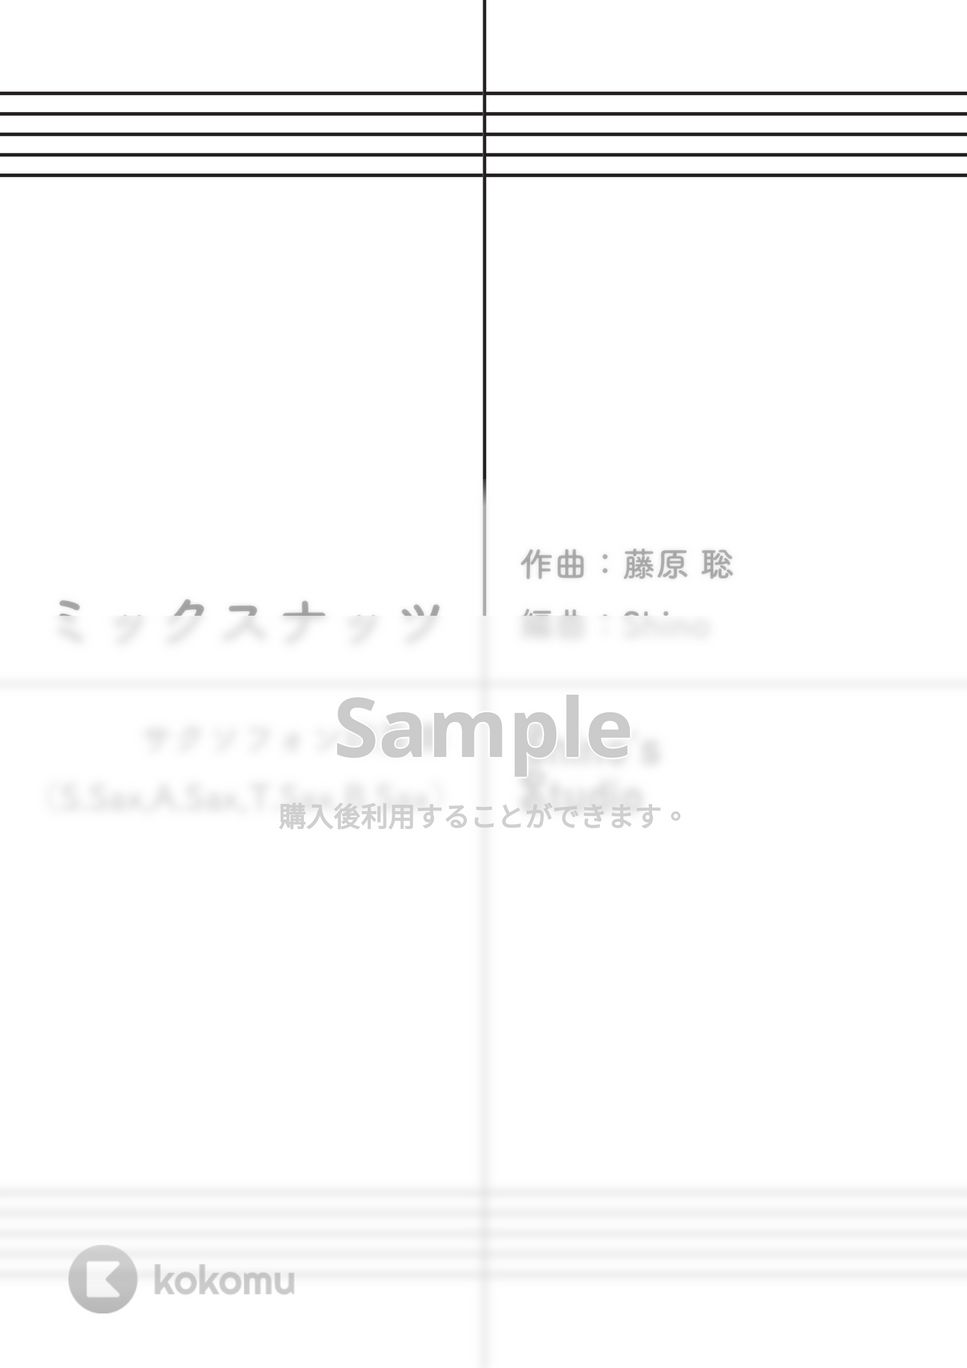 Official髭男dism - 【サックス四重奏】ミックスナッツ【特典盤】 by Shino